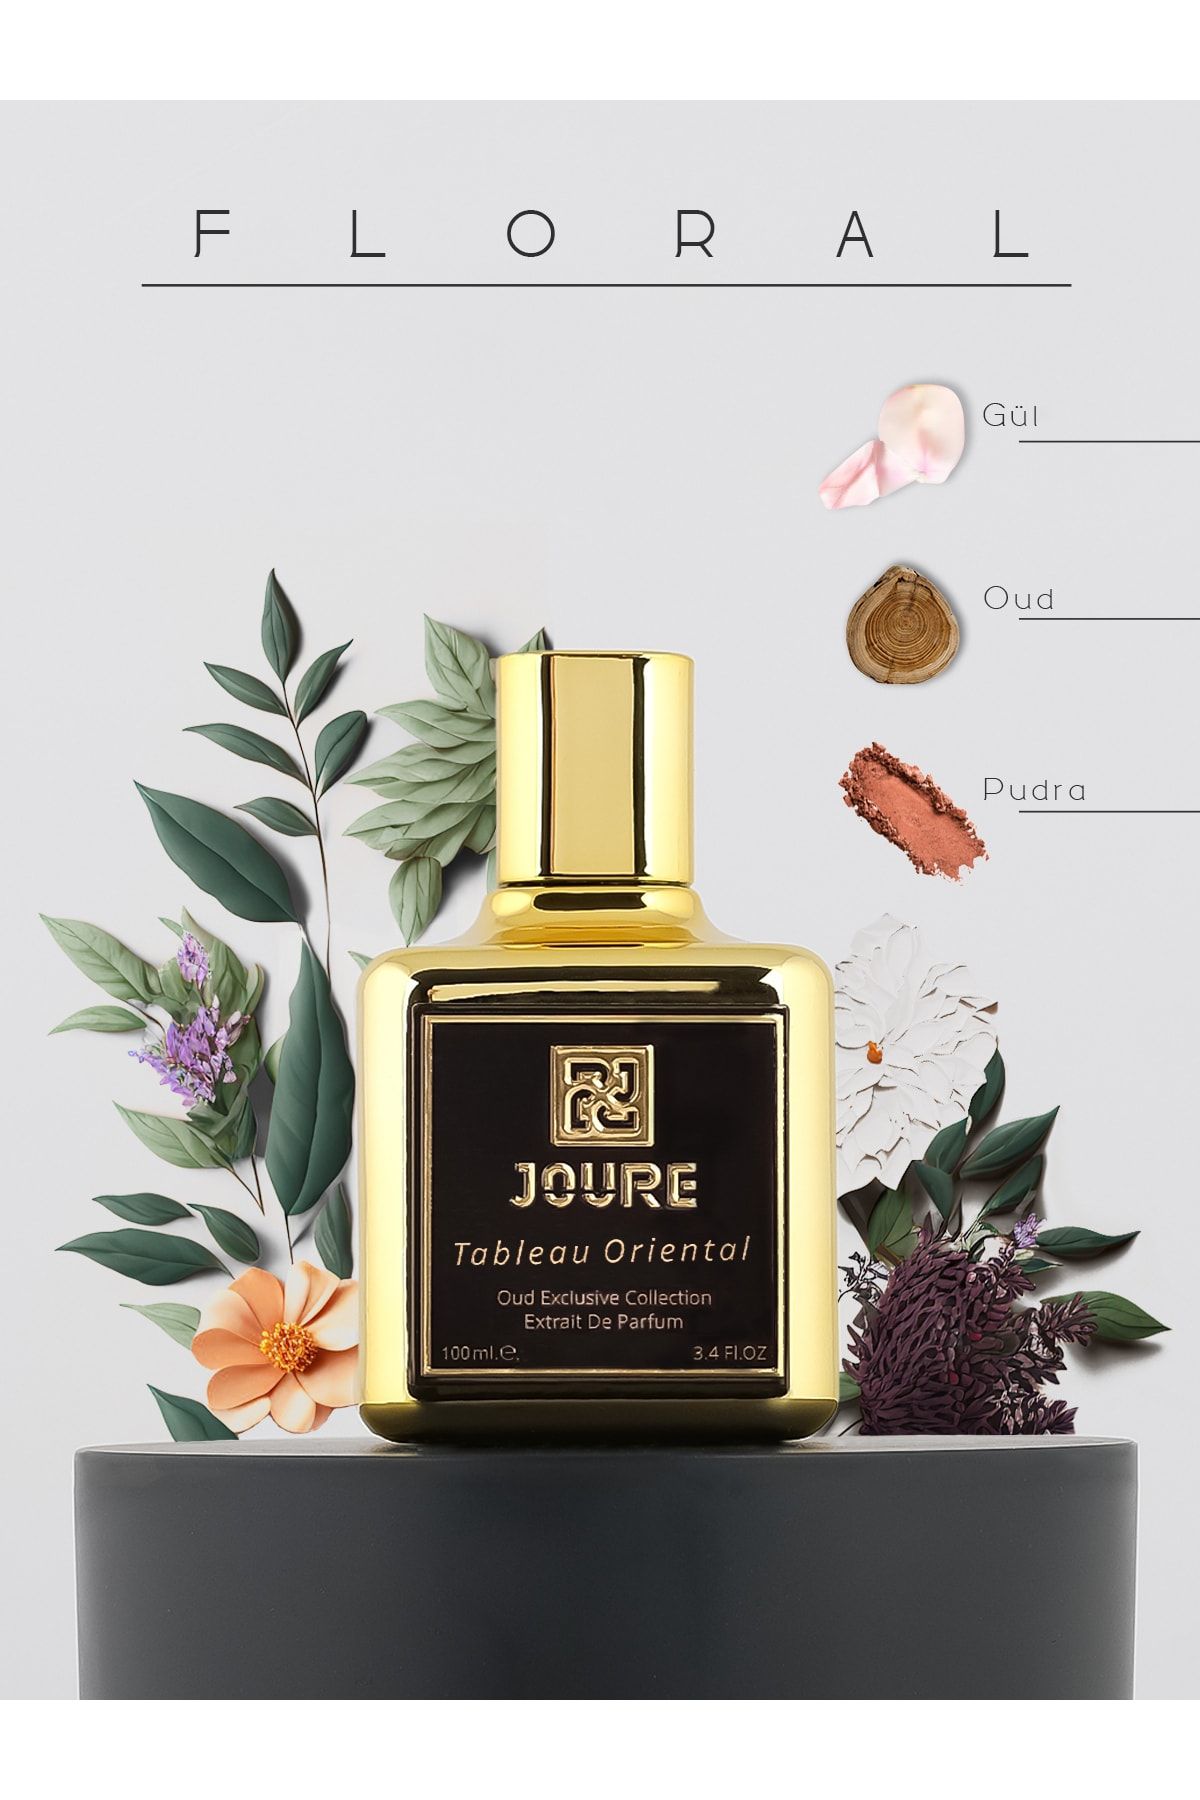 JOURE PERFUME Tableau Orıental - Oud Ve Gül Kokulu 100ml Kalıcı Extraıt De Parfum Unısex Arabic Parfüm, Atr